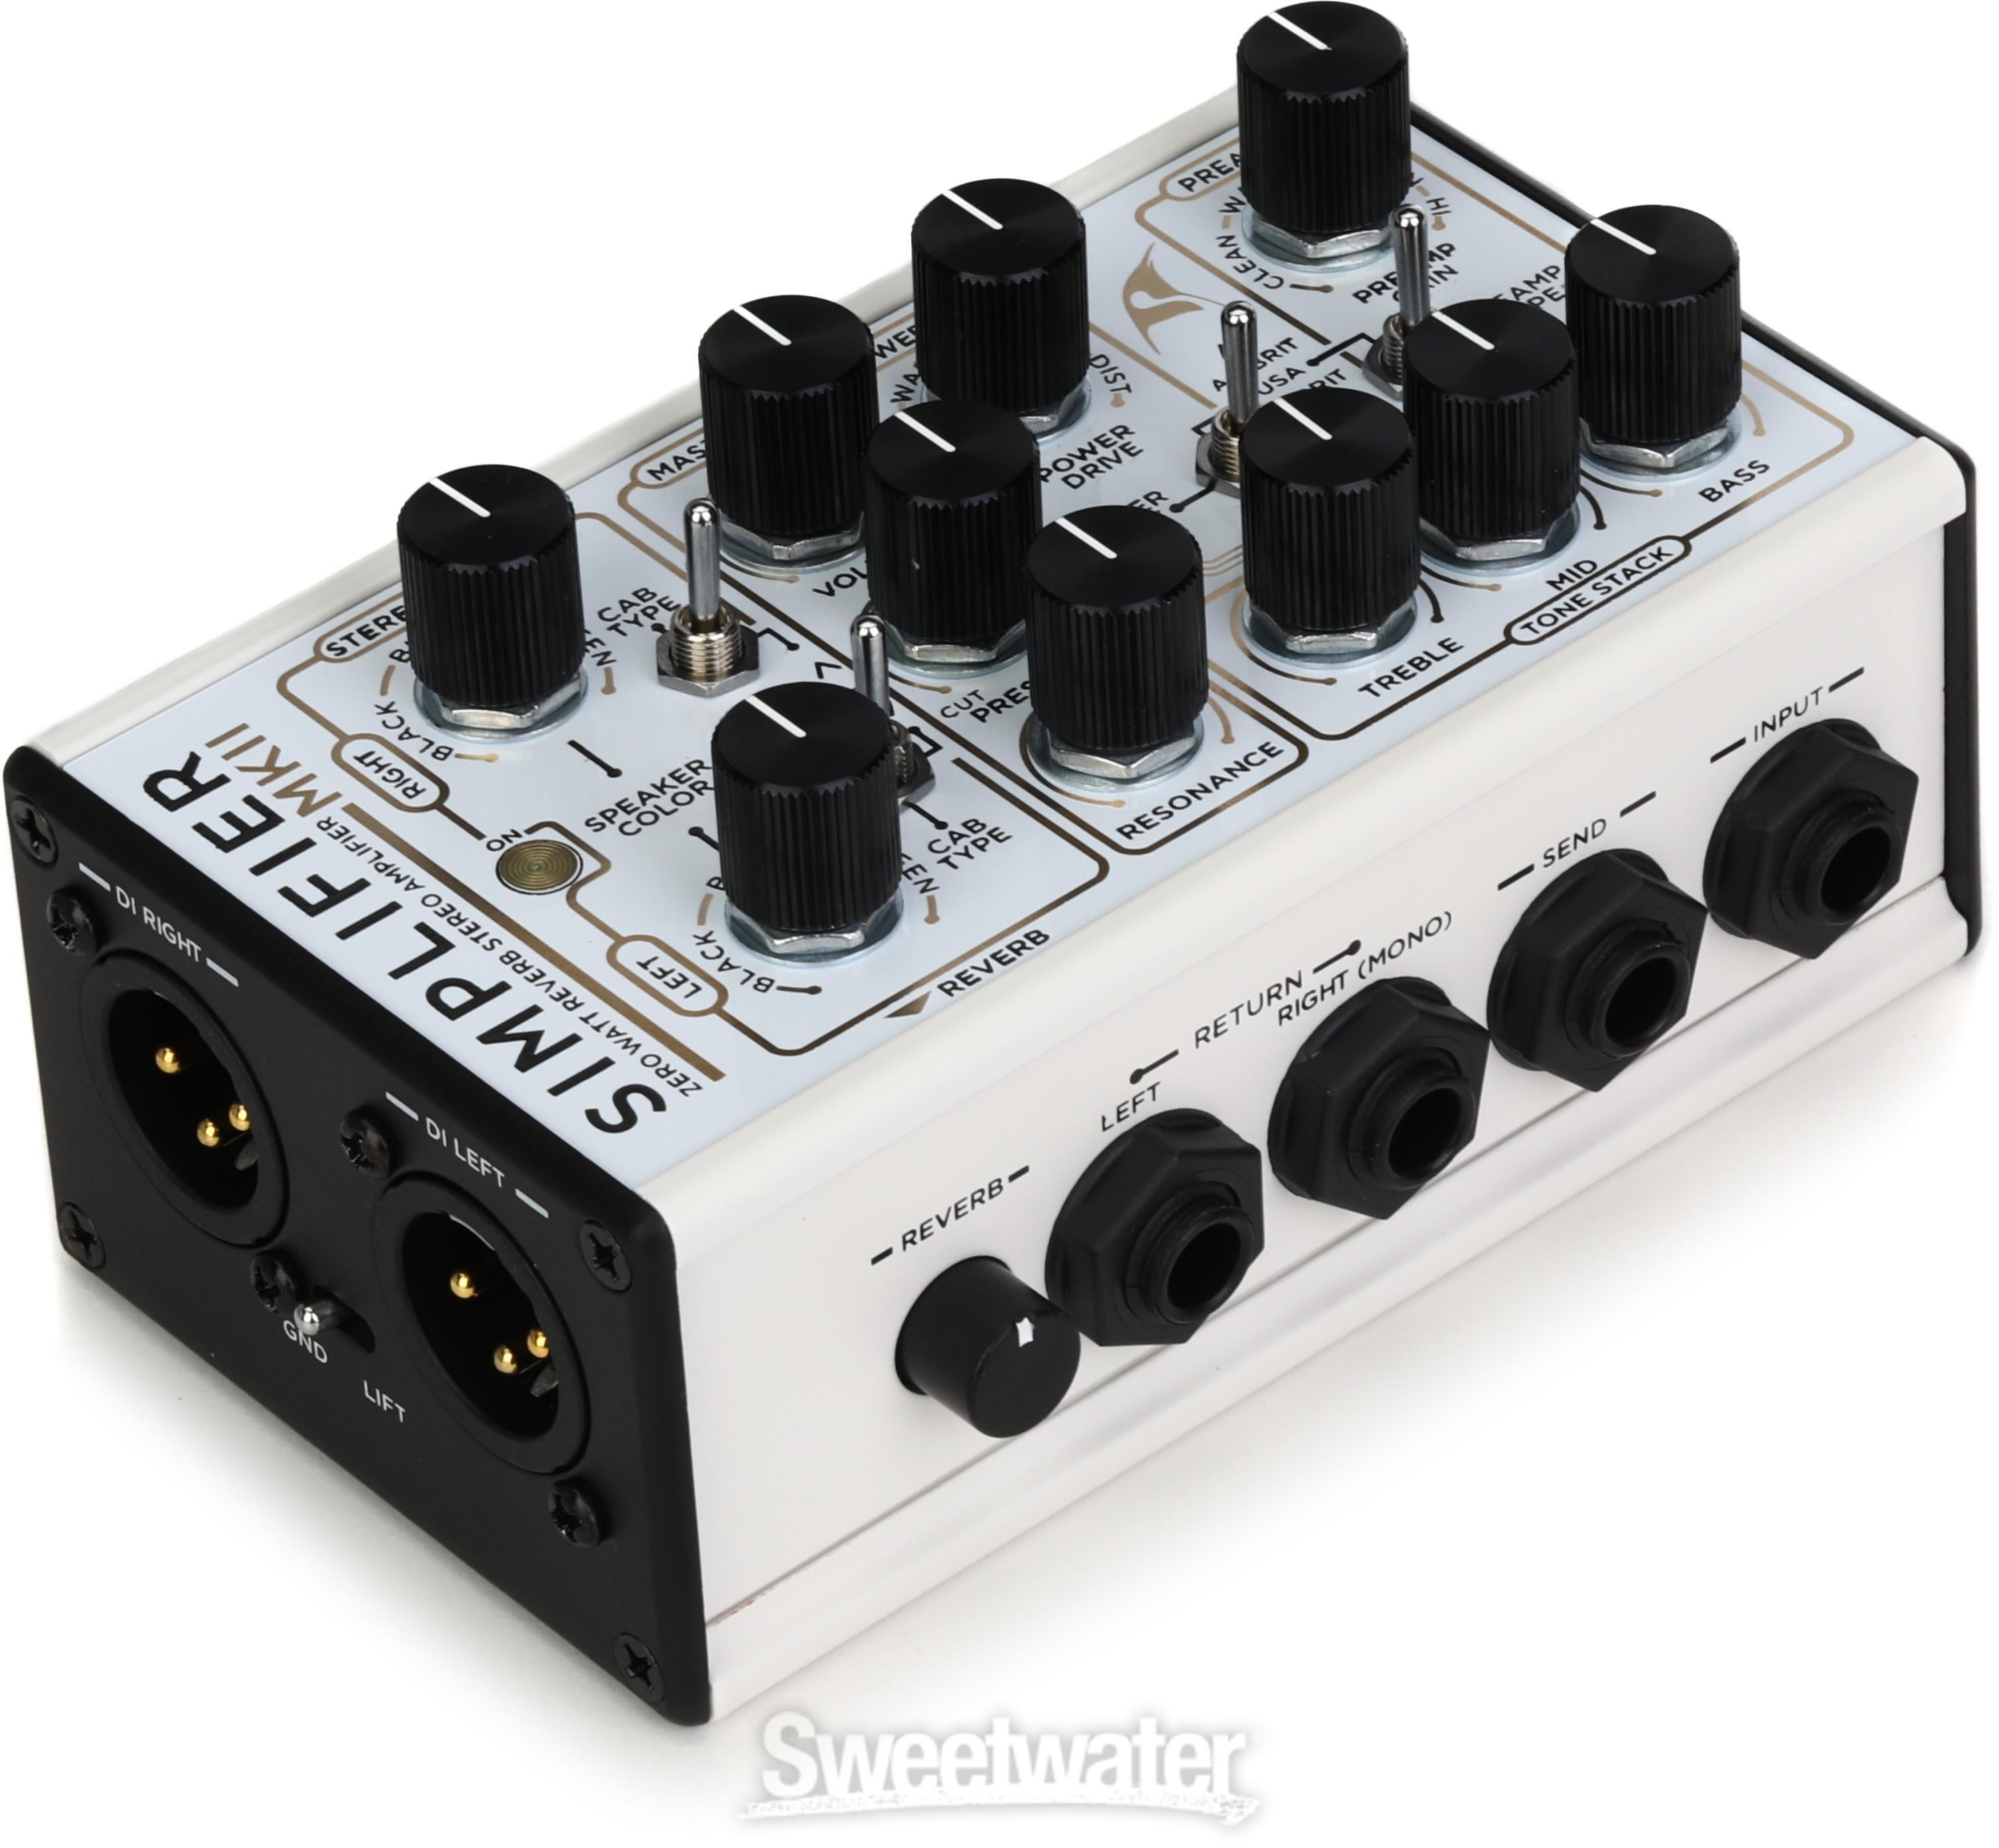 DSM Humboldt Electronics Simplifier mk2 Zero-watt Stereo Amplifier 